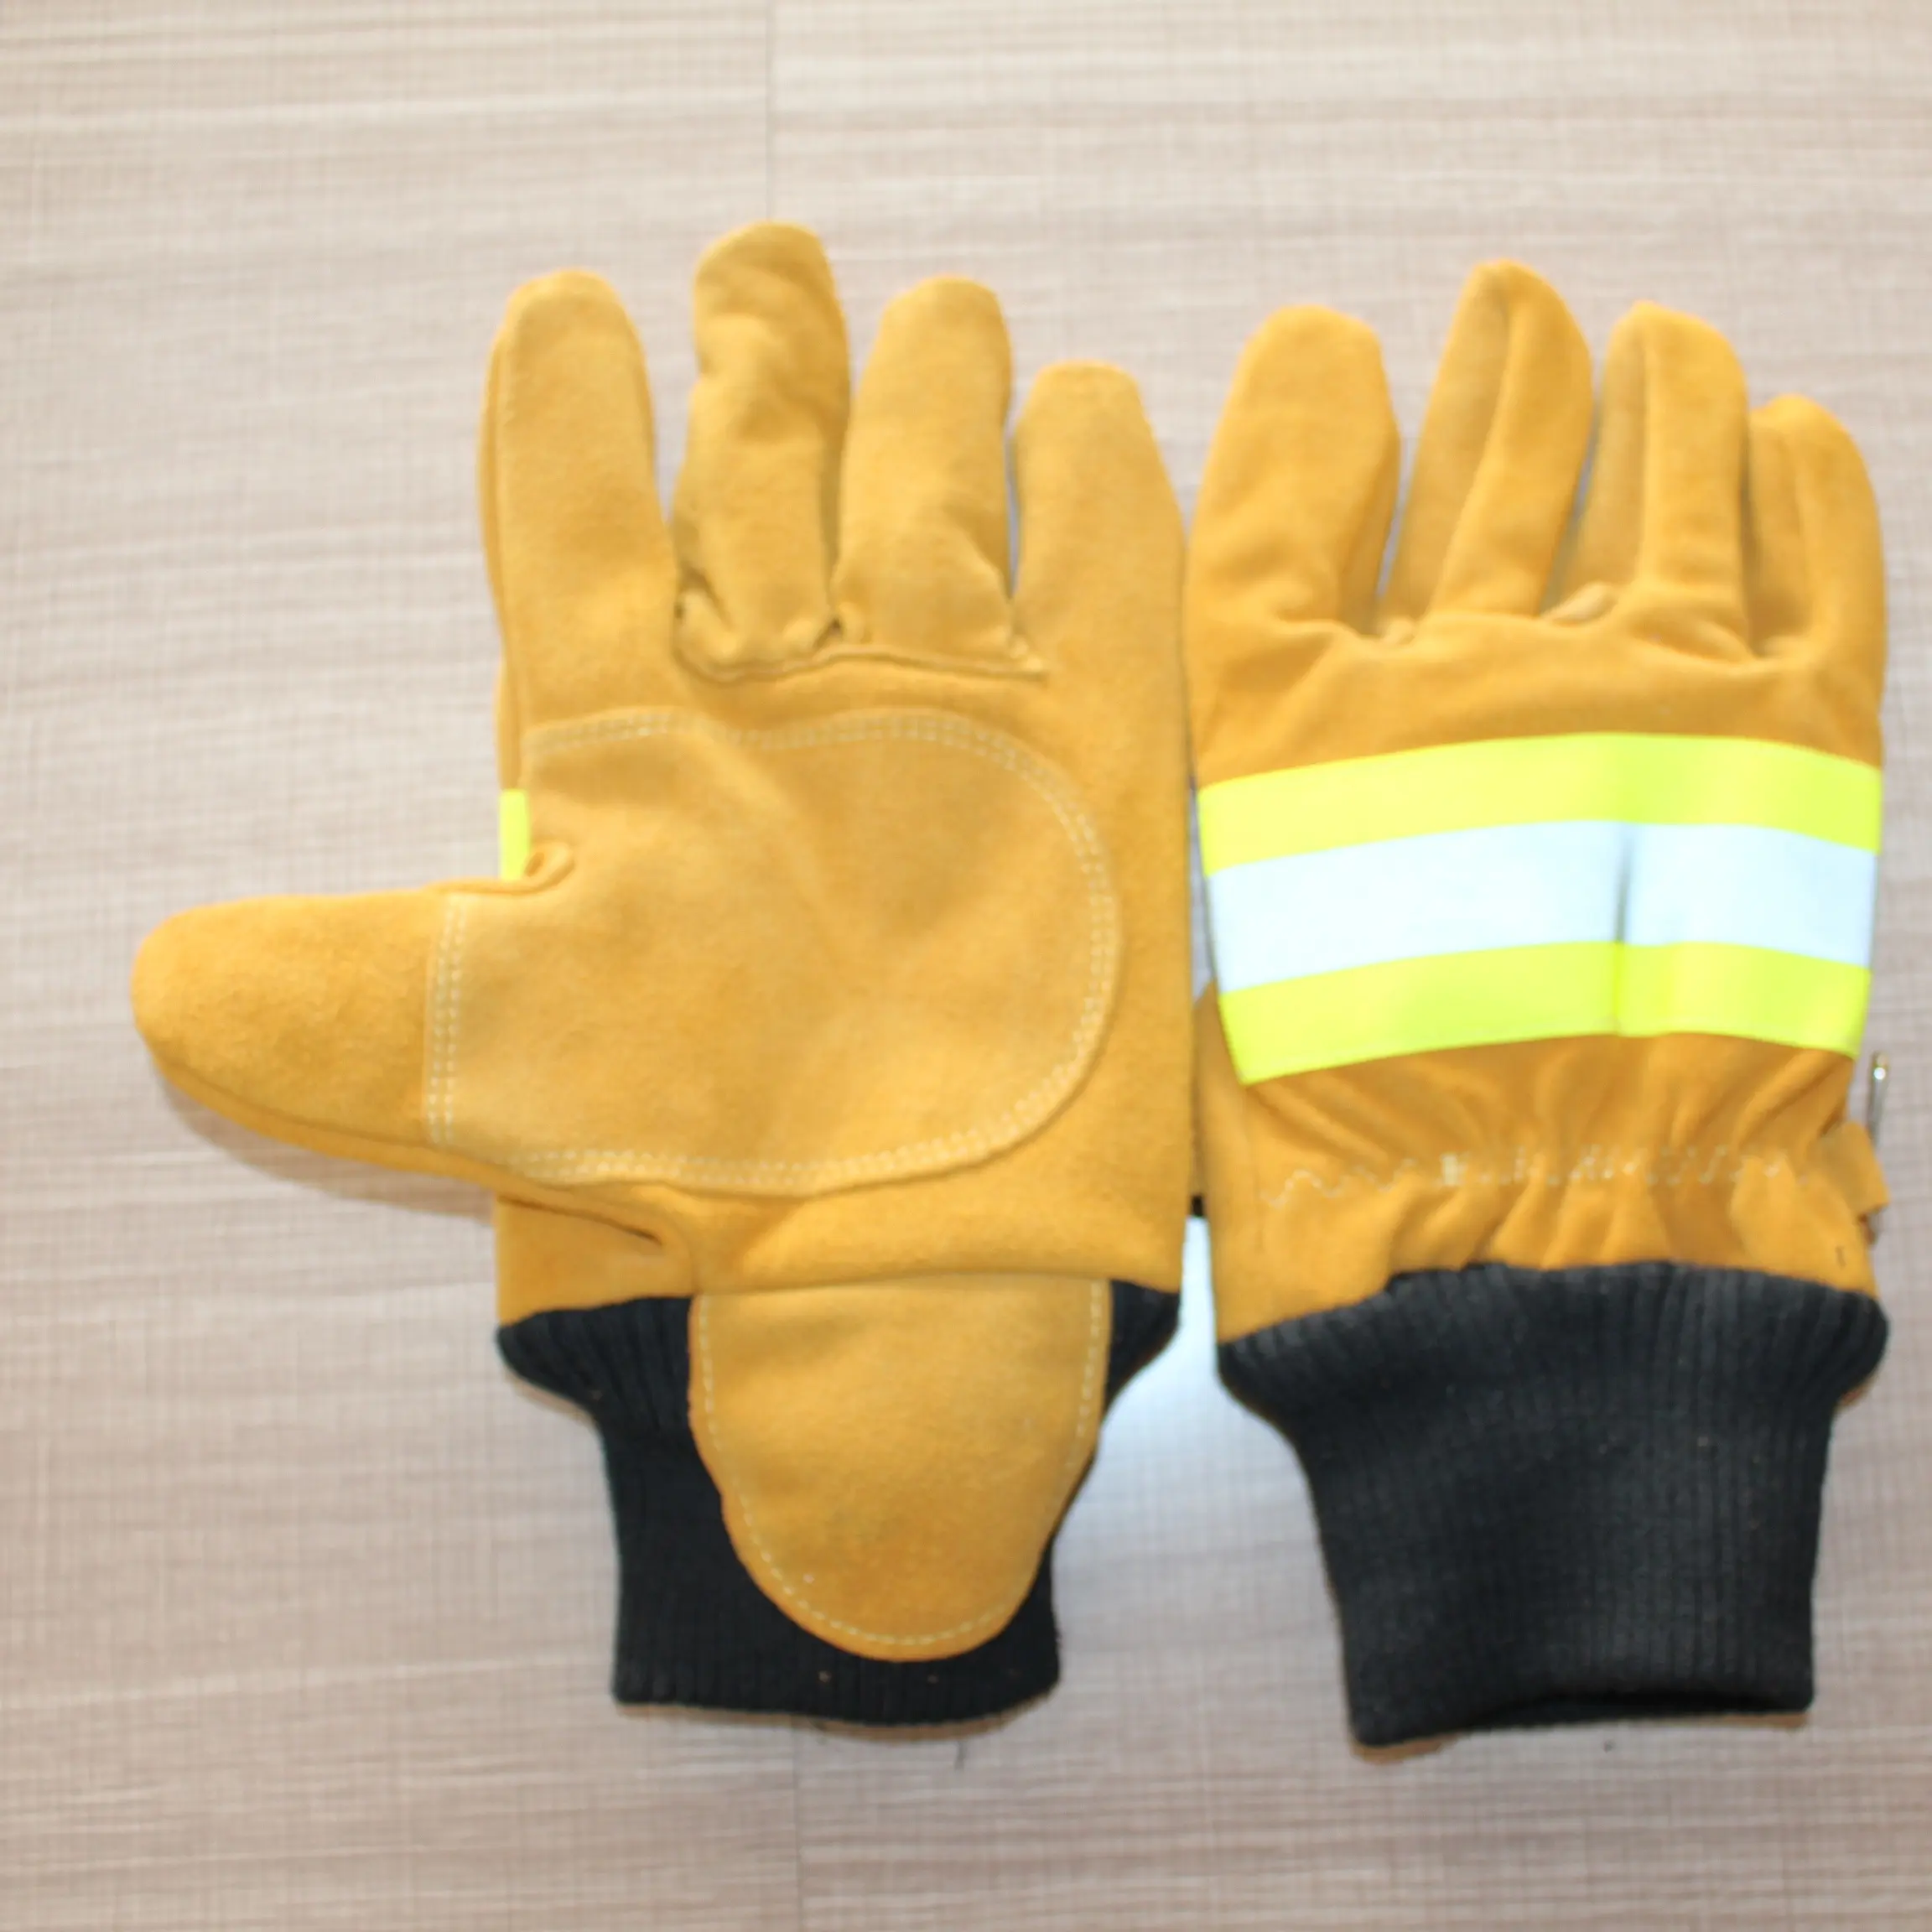 EN ISO-معدات حماية من الحرائق ، وتطبيقات ، وقفازات الإنقاذ الملونة المخصصة ، لرجال الإطفاء